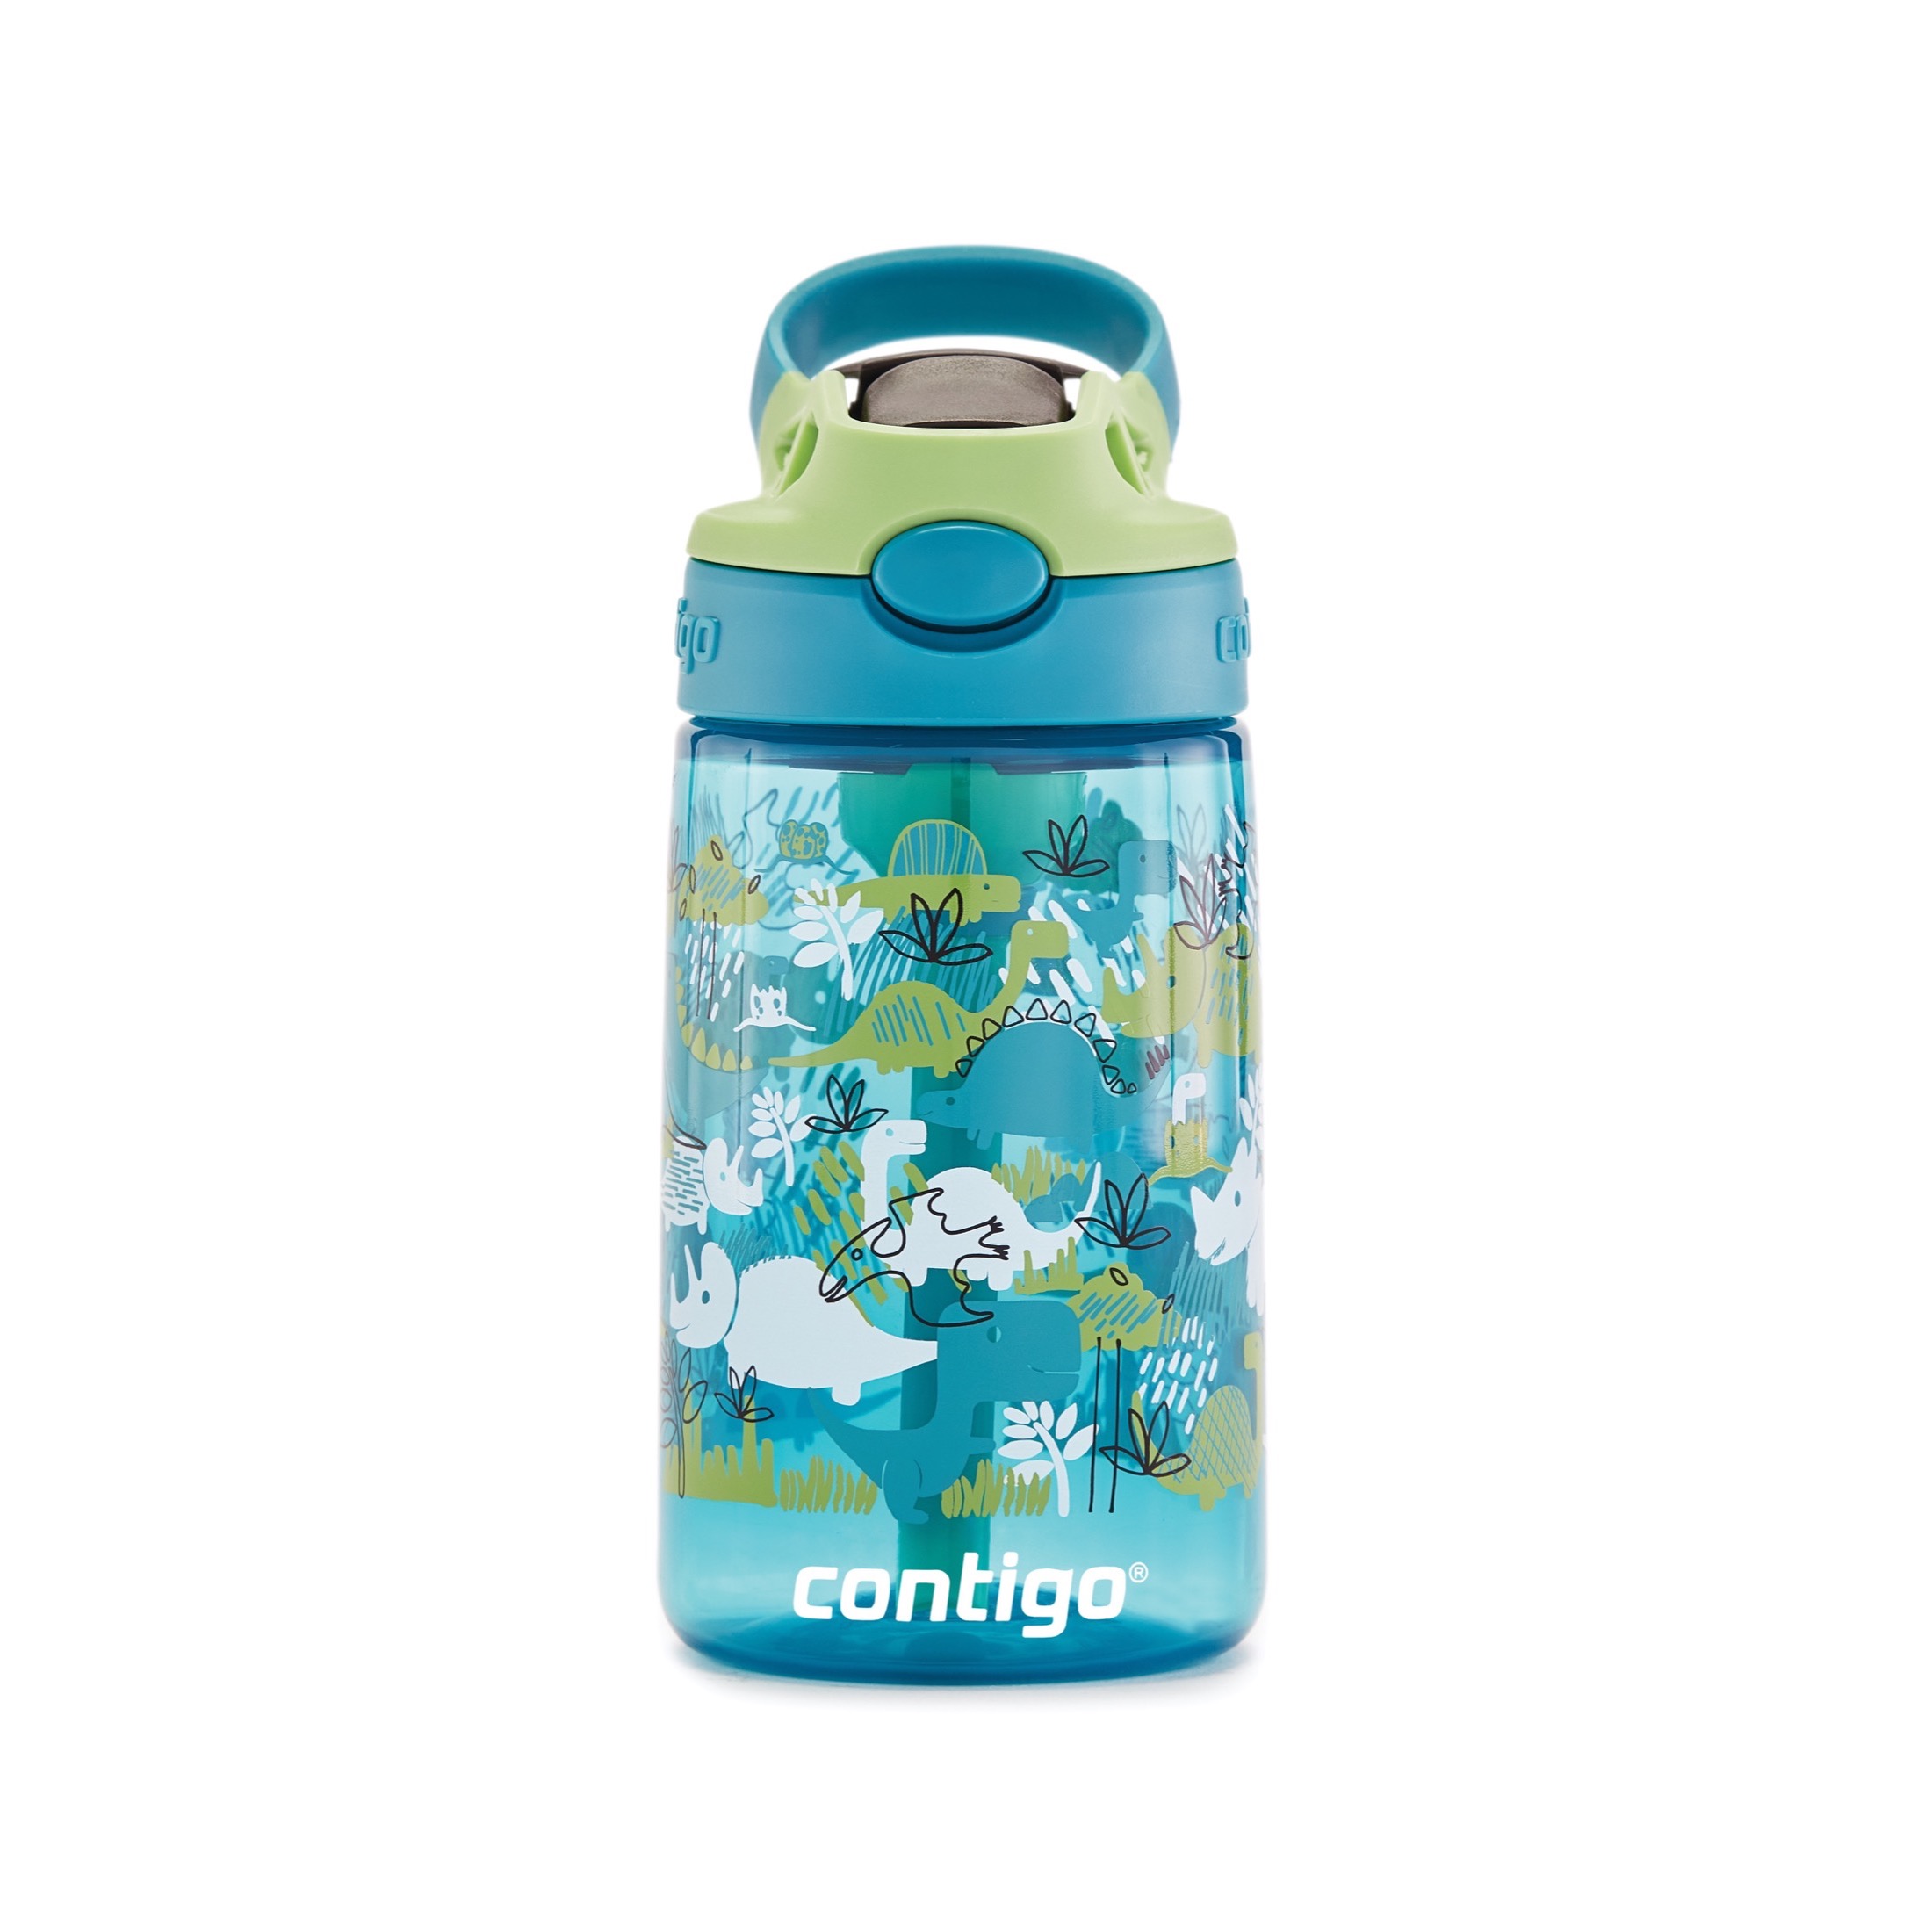 Contigo Kids Water Bottle with Autospout Straw Green & Blue, 14 fl oz. - image 1 of 8